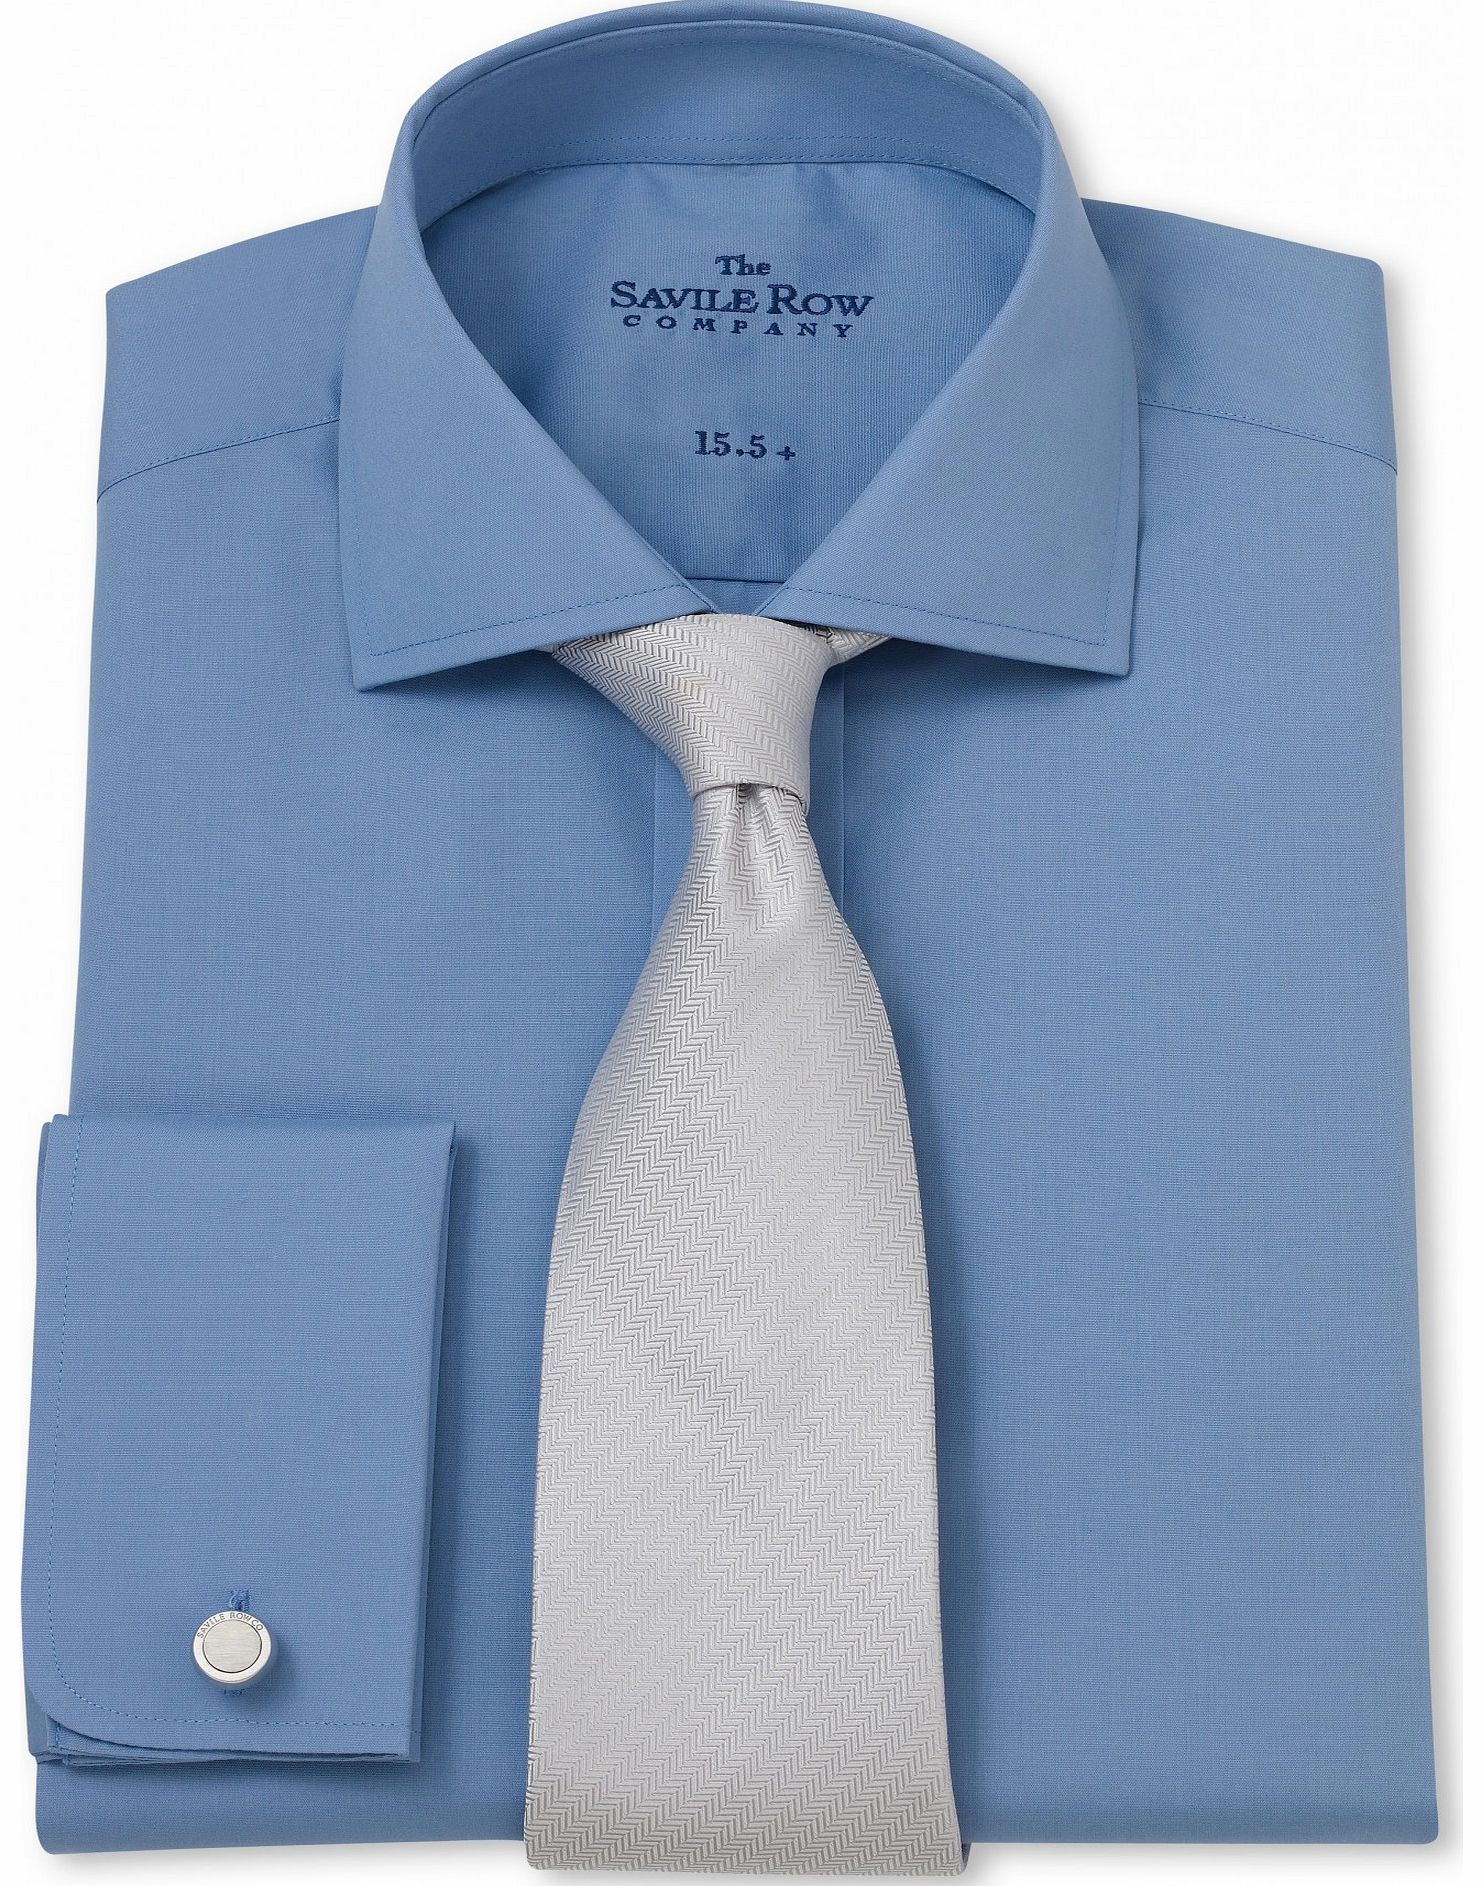 Savile Row Company Air Force Blue Poplin Slim Fit Shirt 15 1/2``